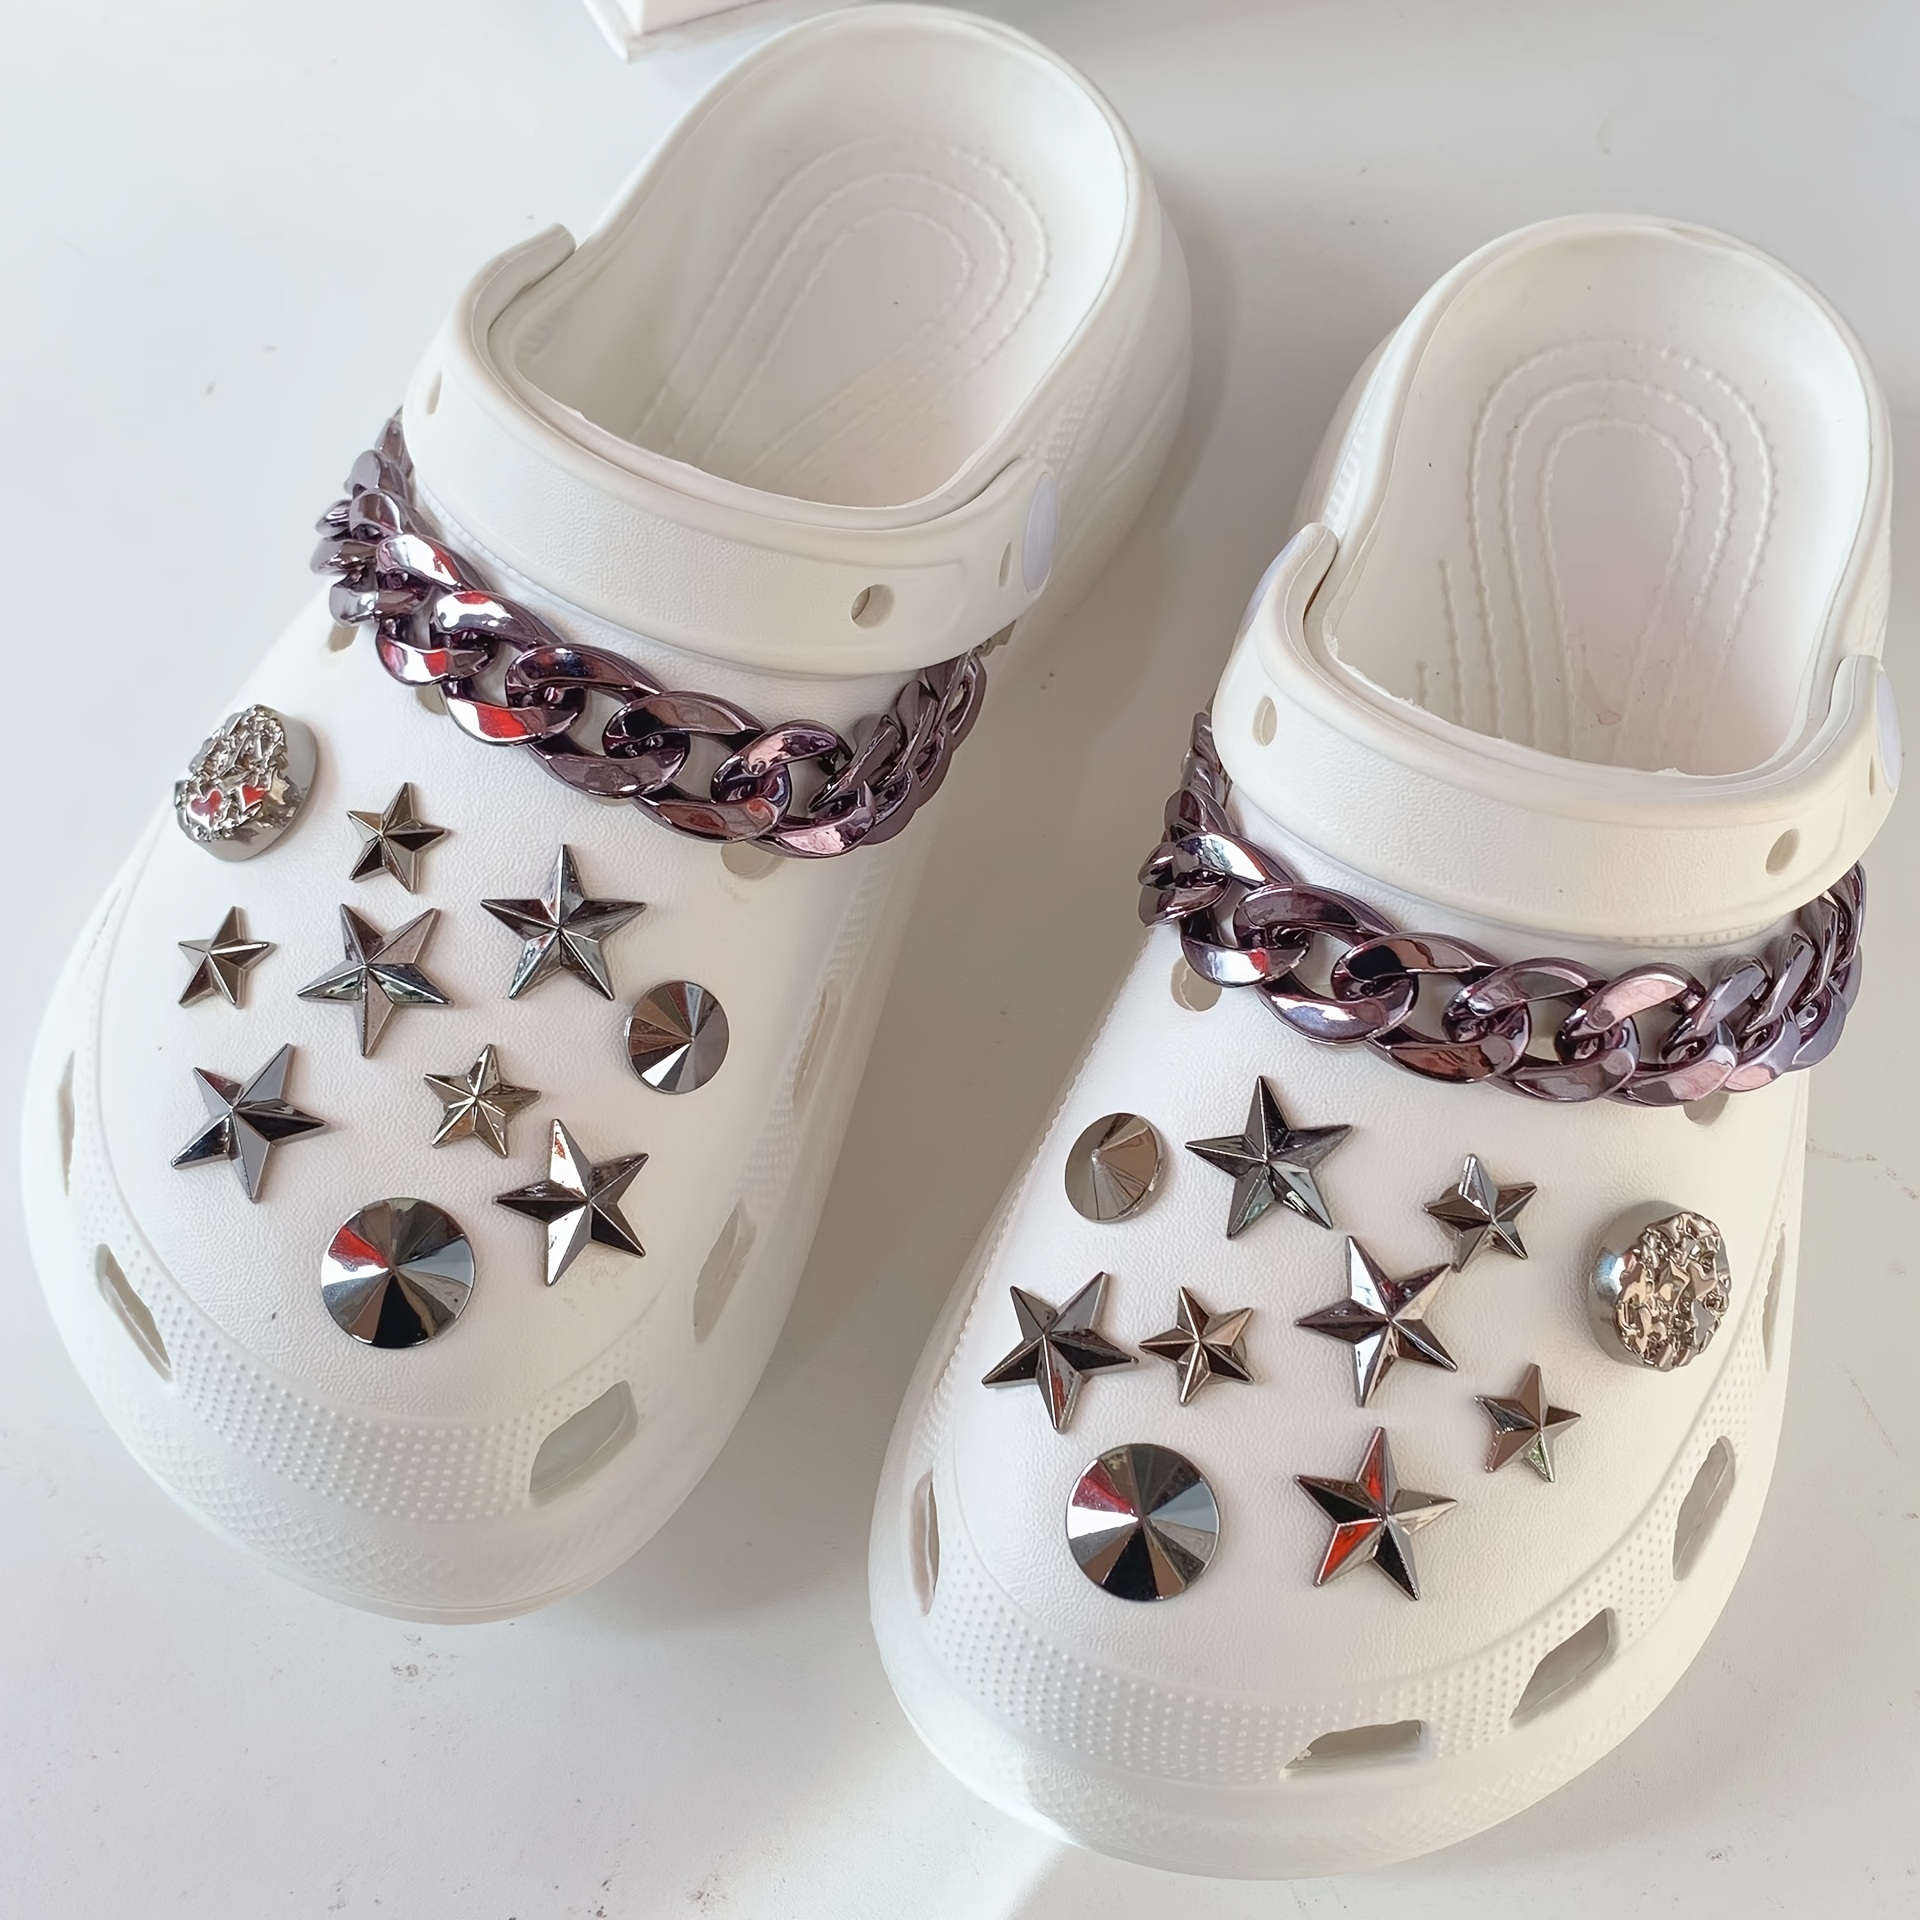 Qchengsan Bling Croc Charms, Shoe Charms Fits for Croc Clog